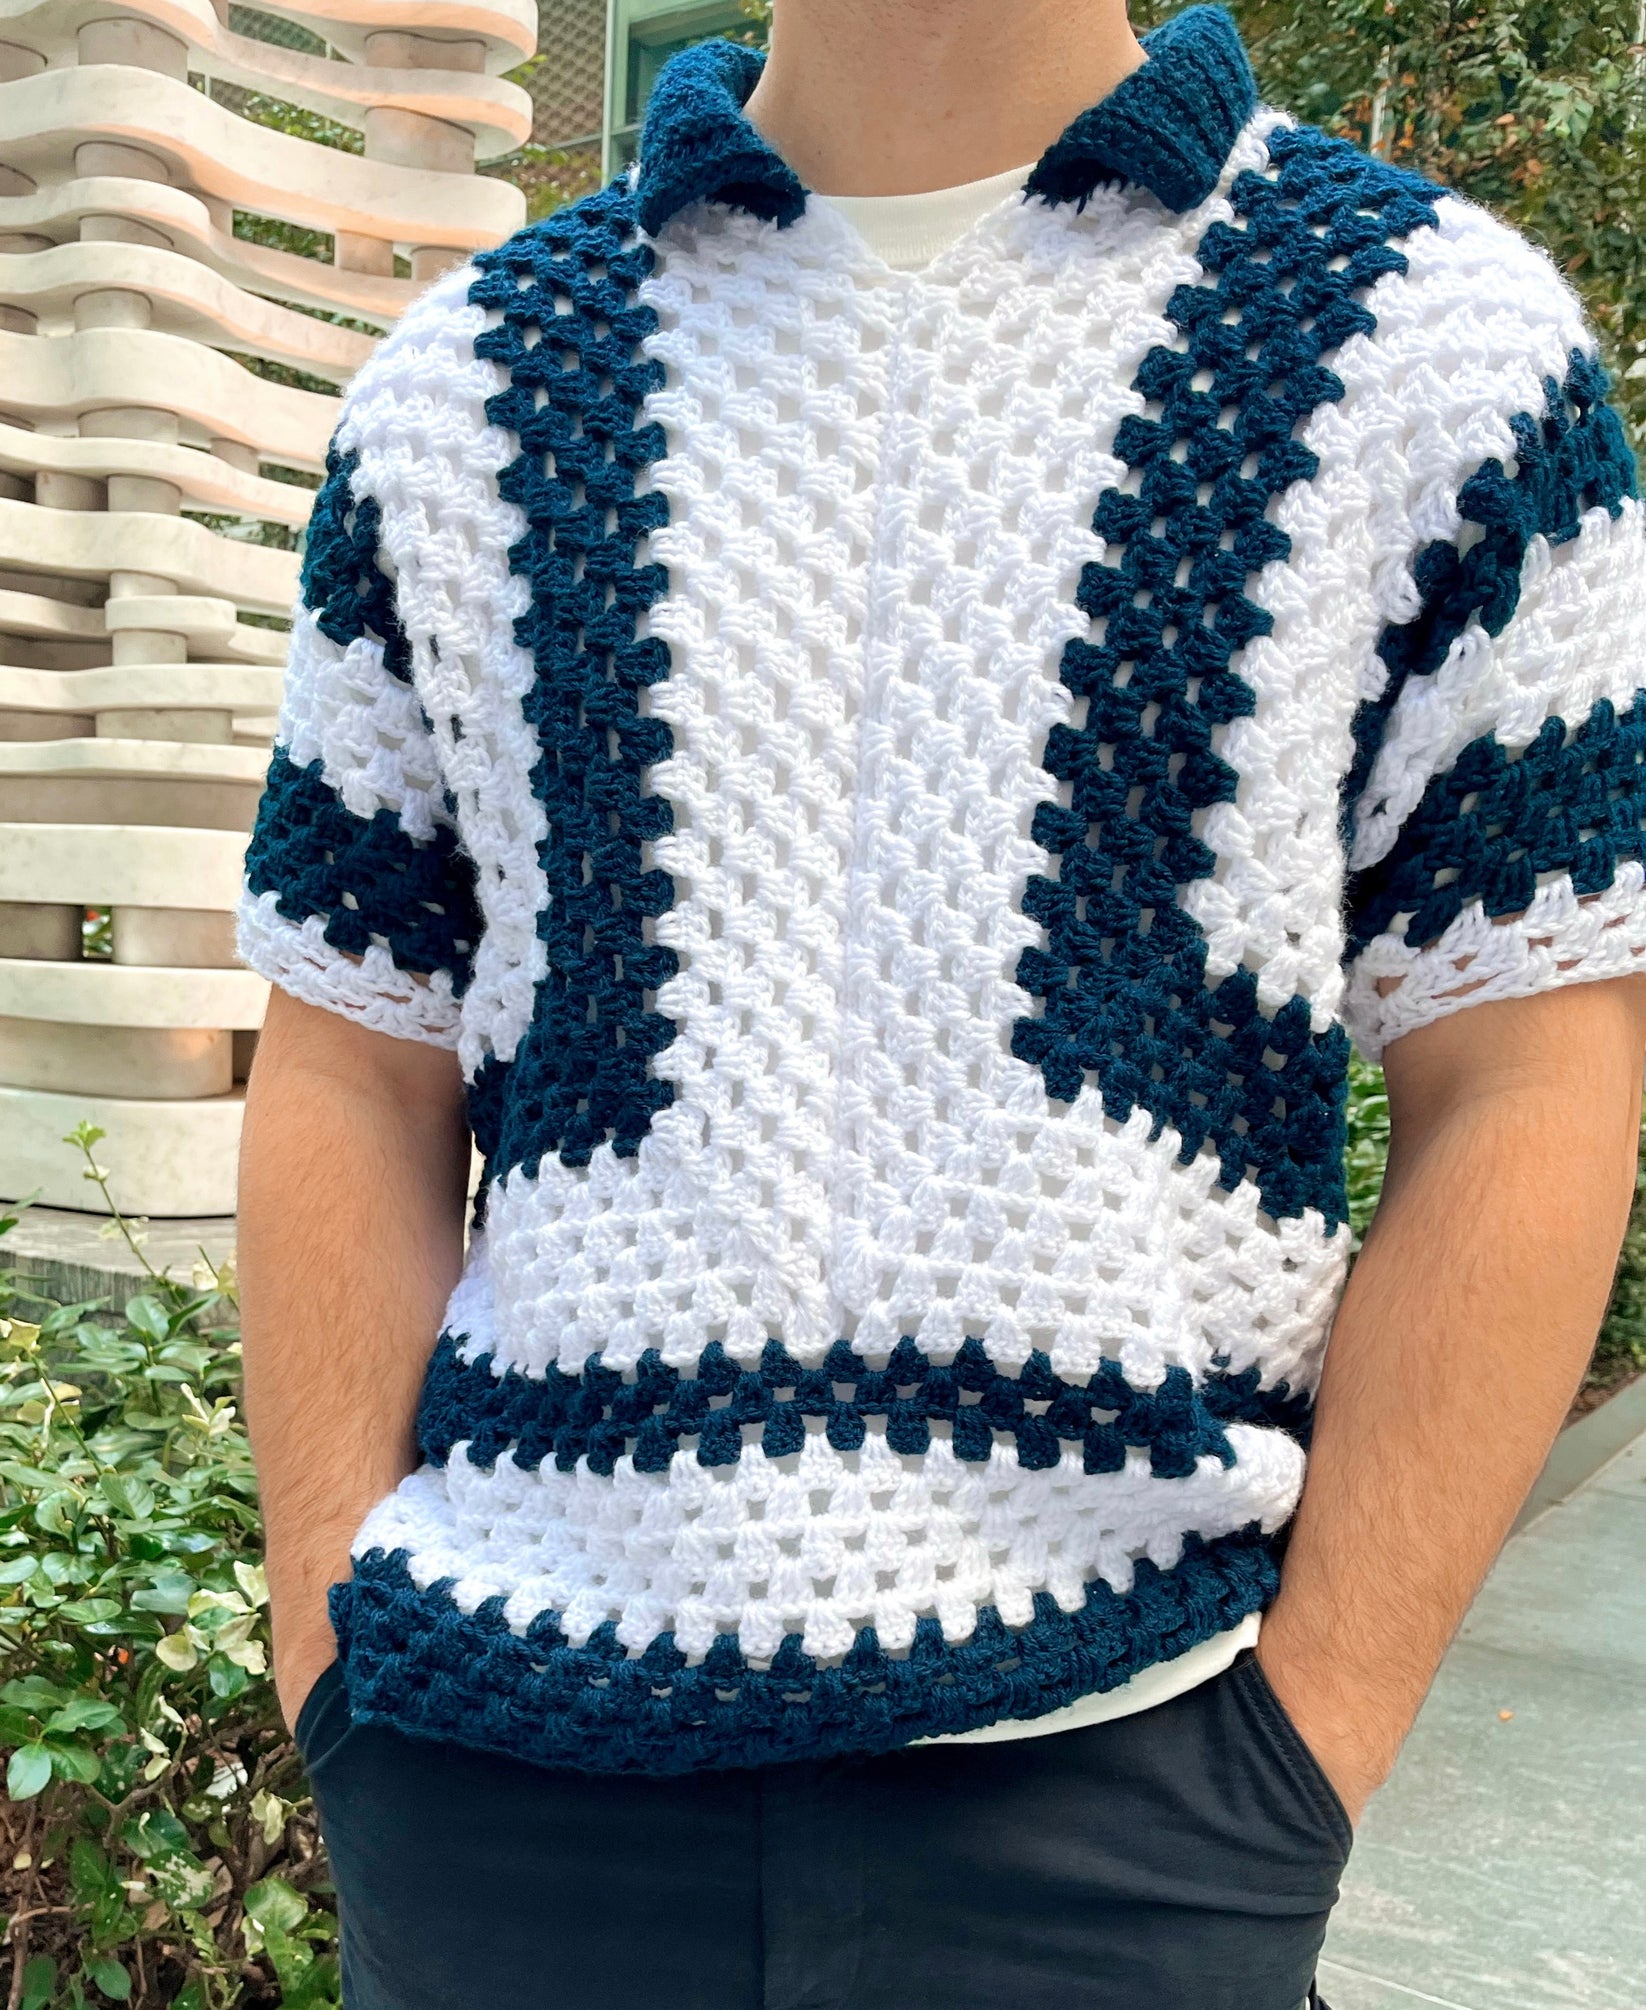 Denver Top Crochet Pattern – The Crocheting